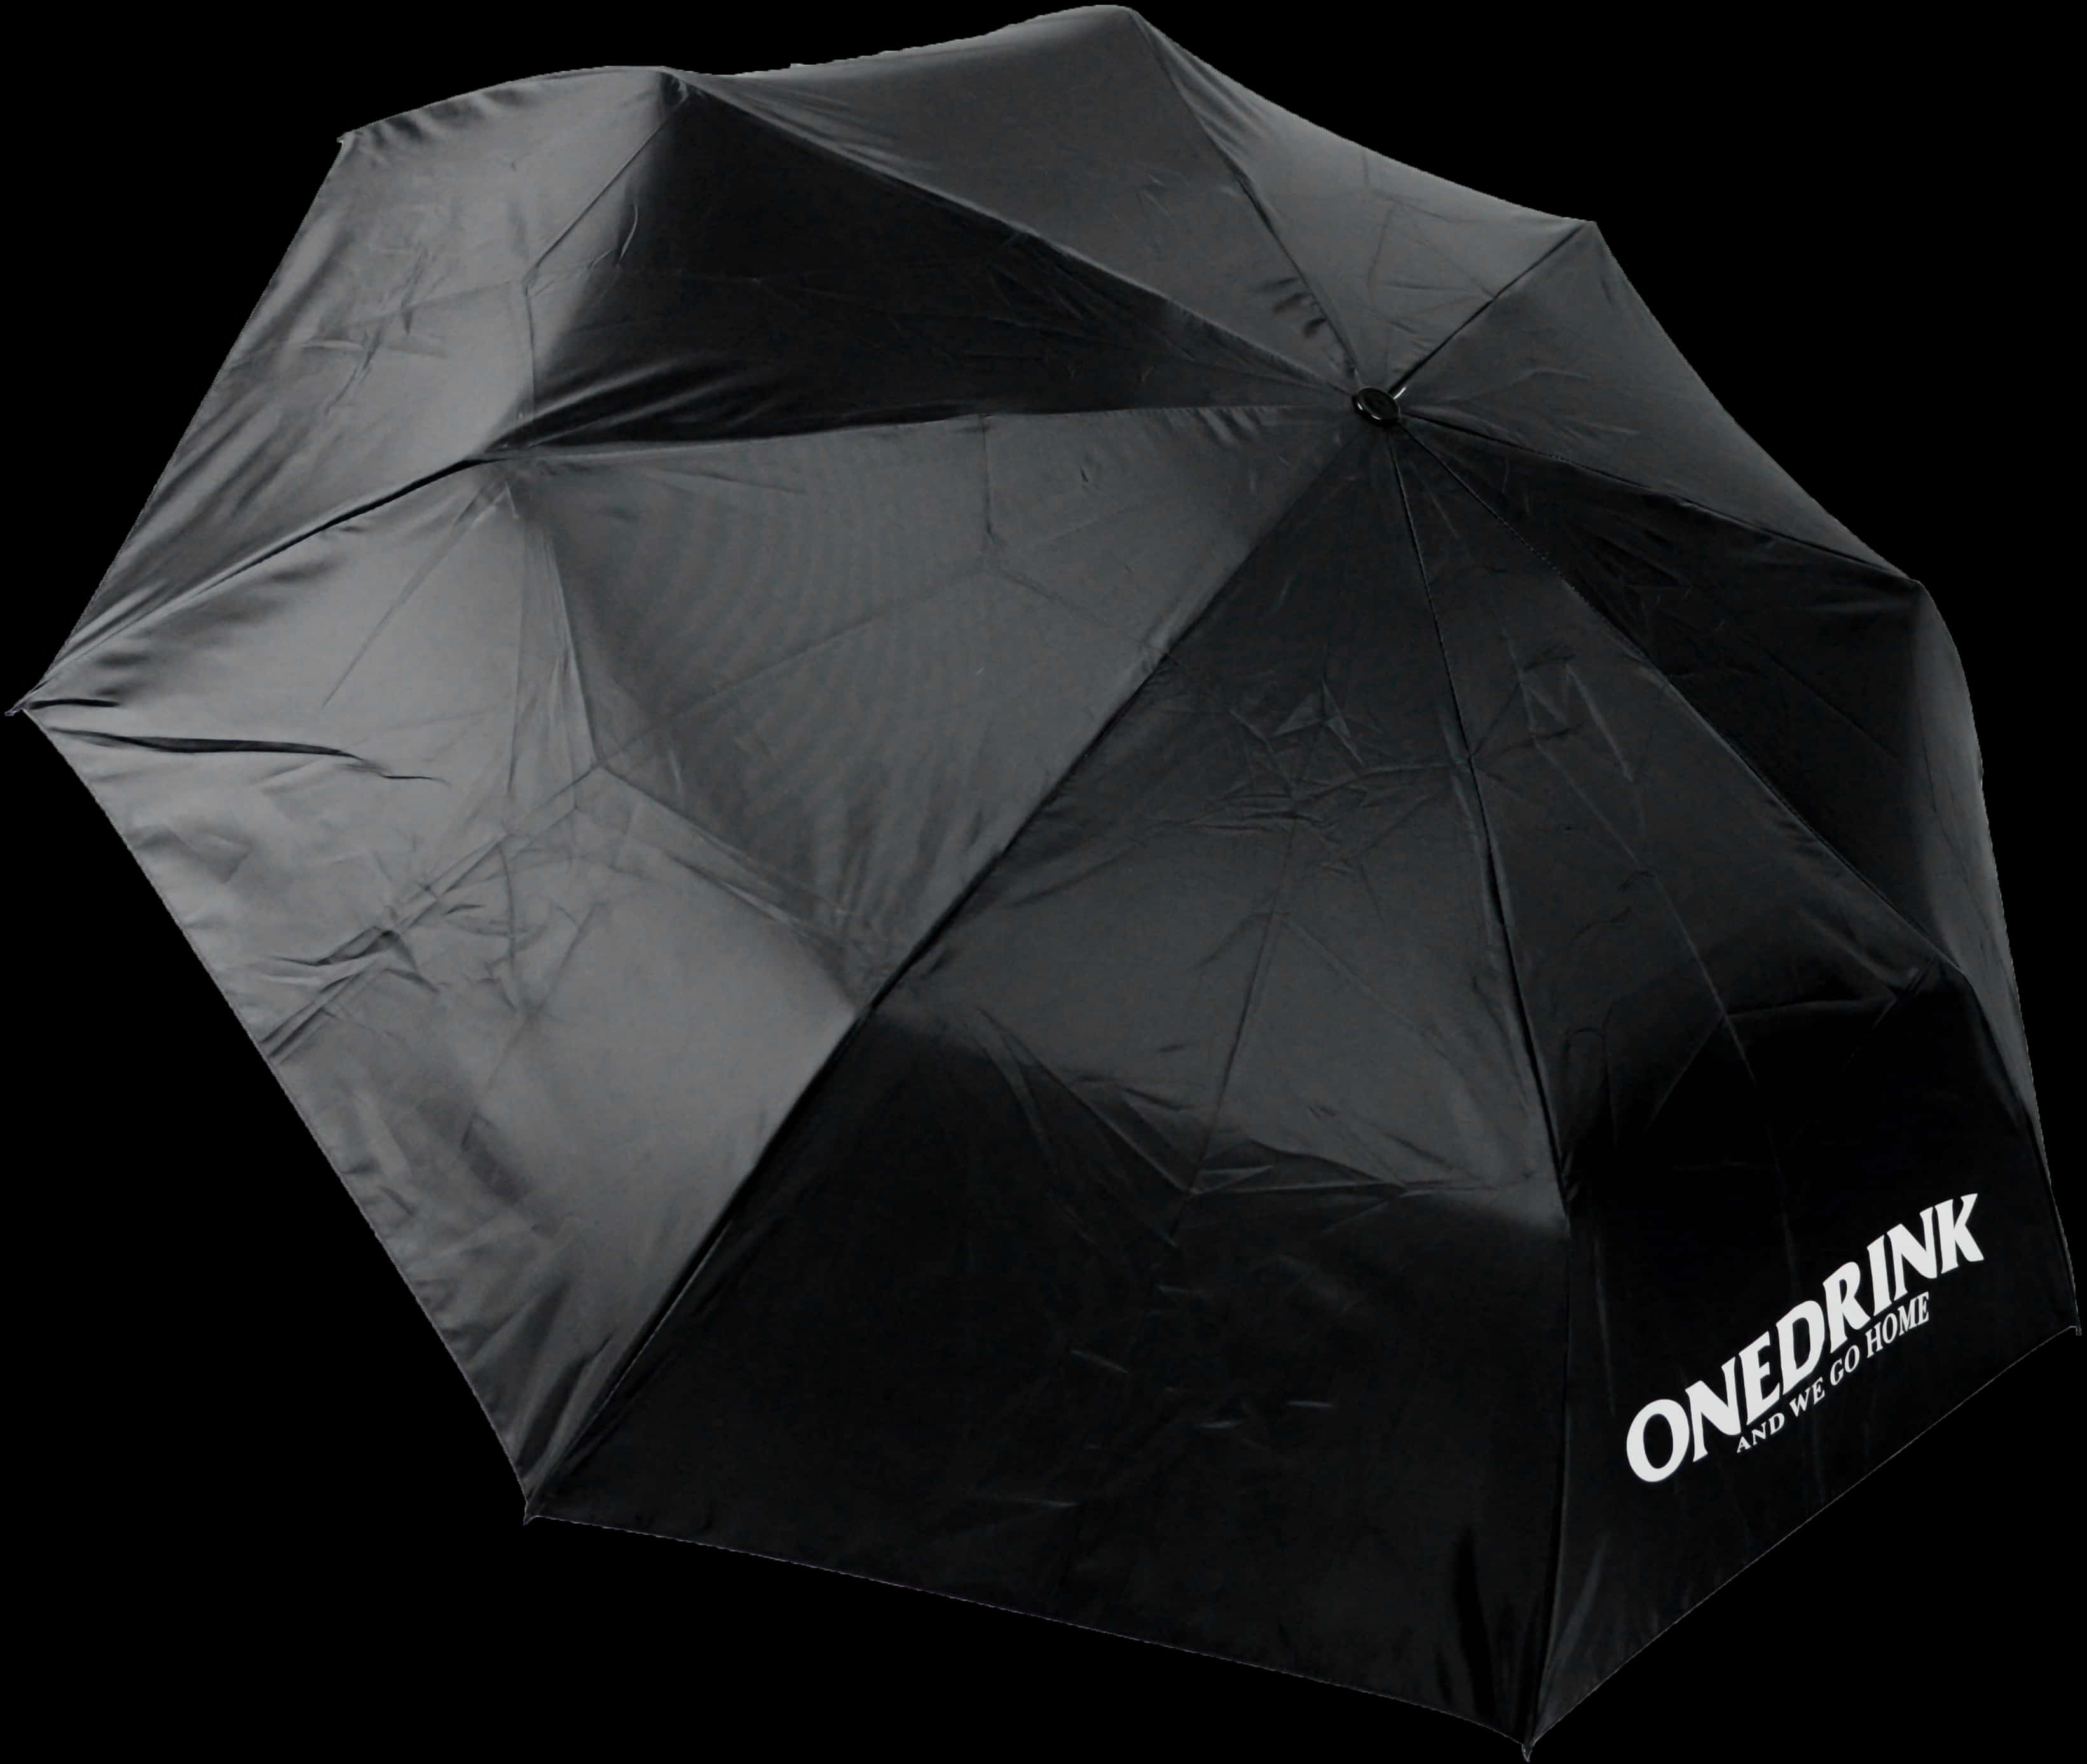 A Black Umbrella With White Text